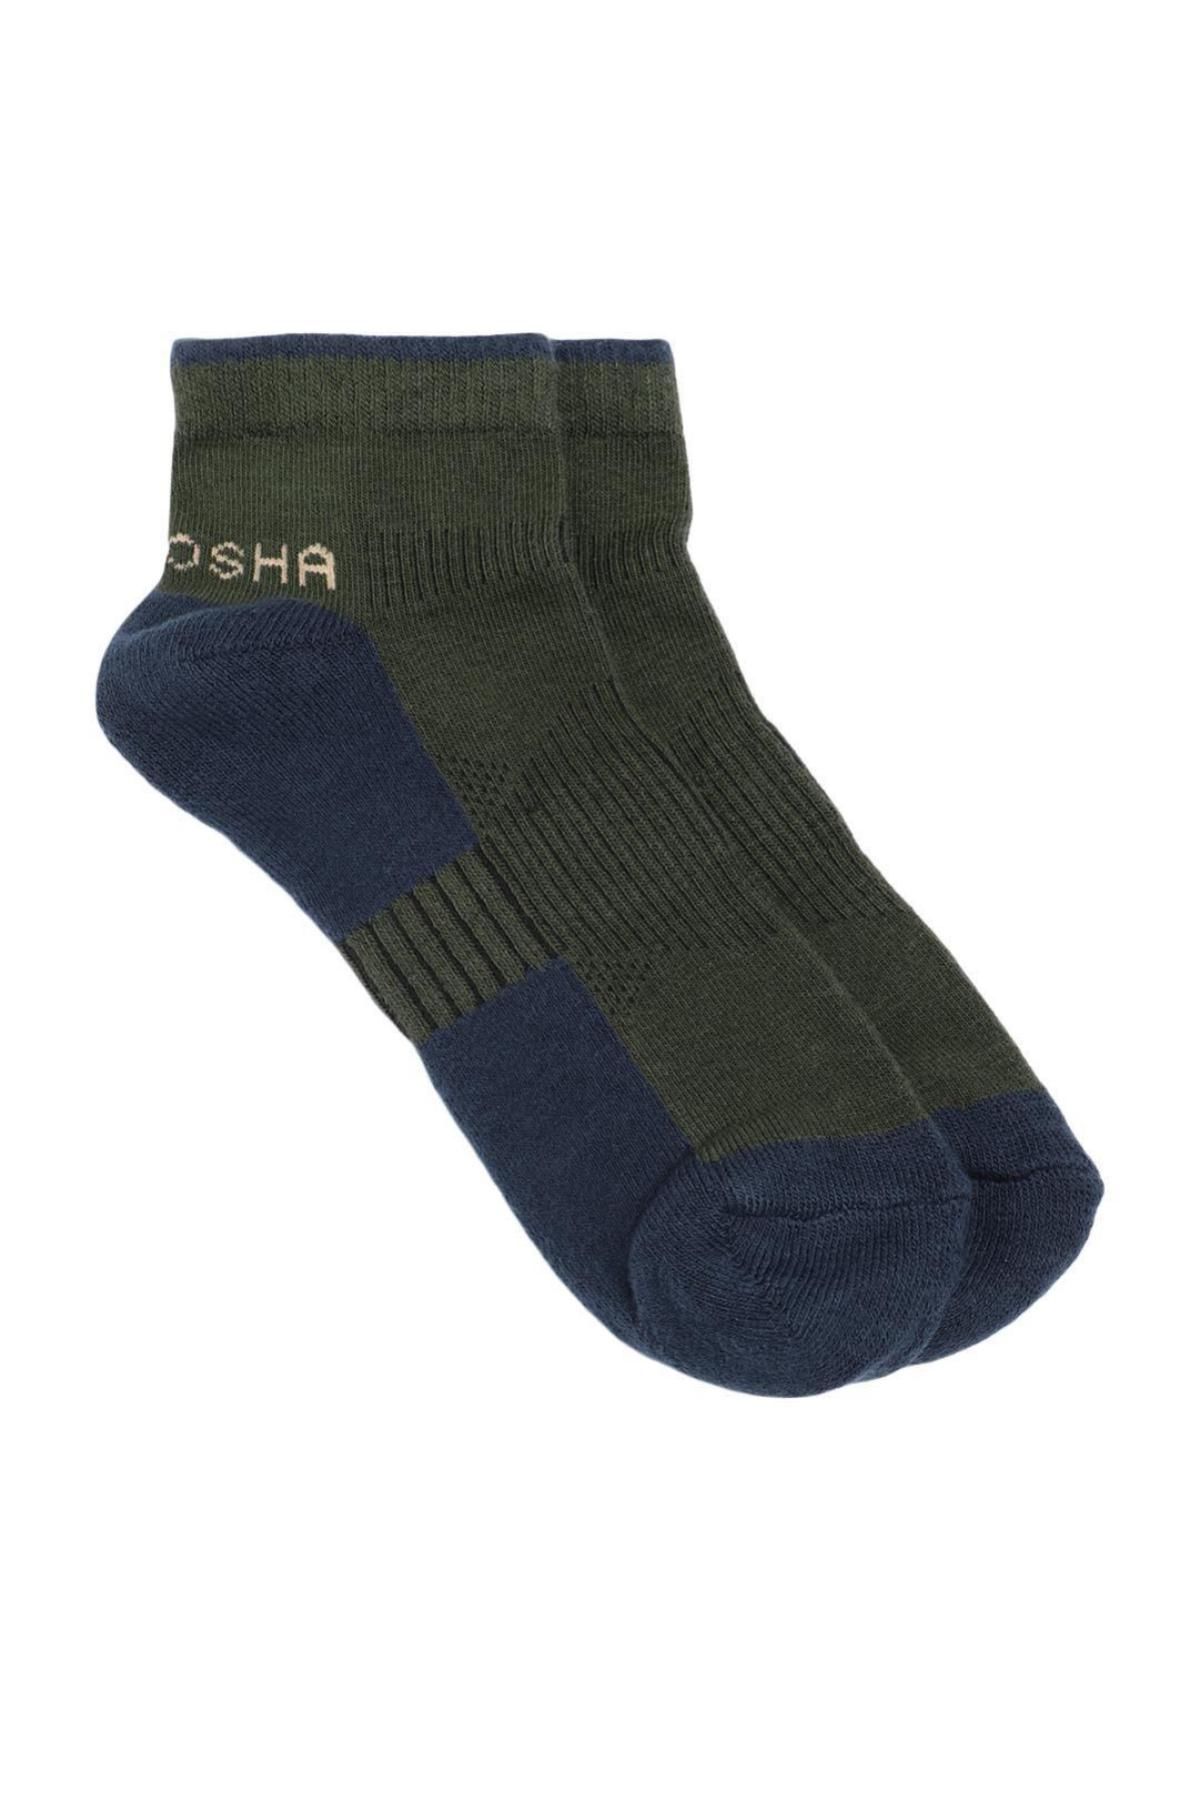 Olive & Navy Ankle Length Cotton Sports Socks | Men